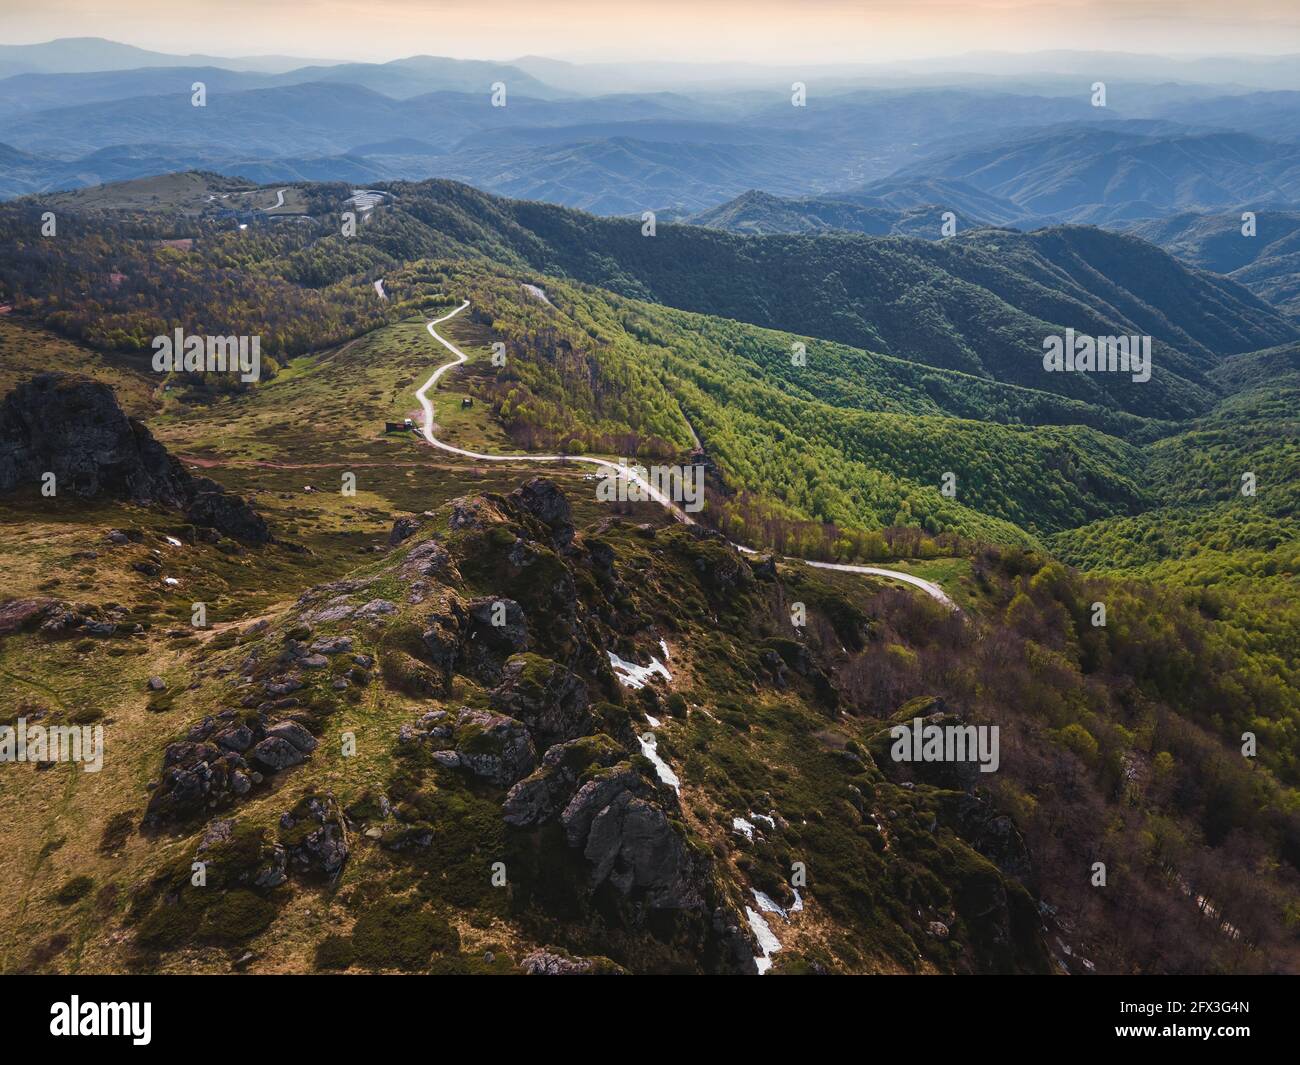 View Of The Mountain Range With Road Heading Through The Mountains. Nature outdoors travel destination, Stara Planina (Balkan mountain), Serbia Stock Photo